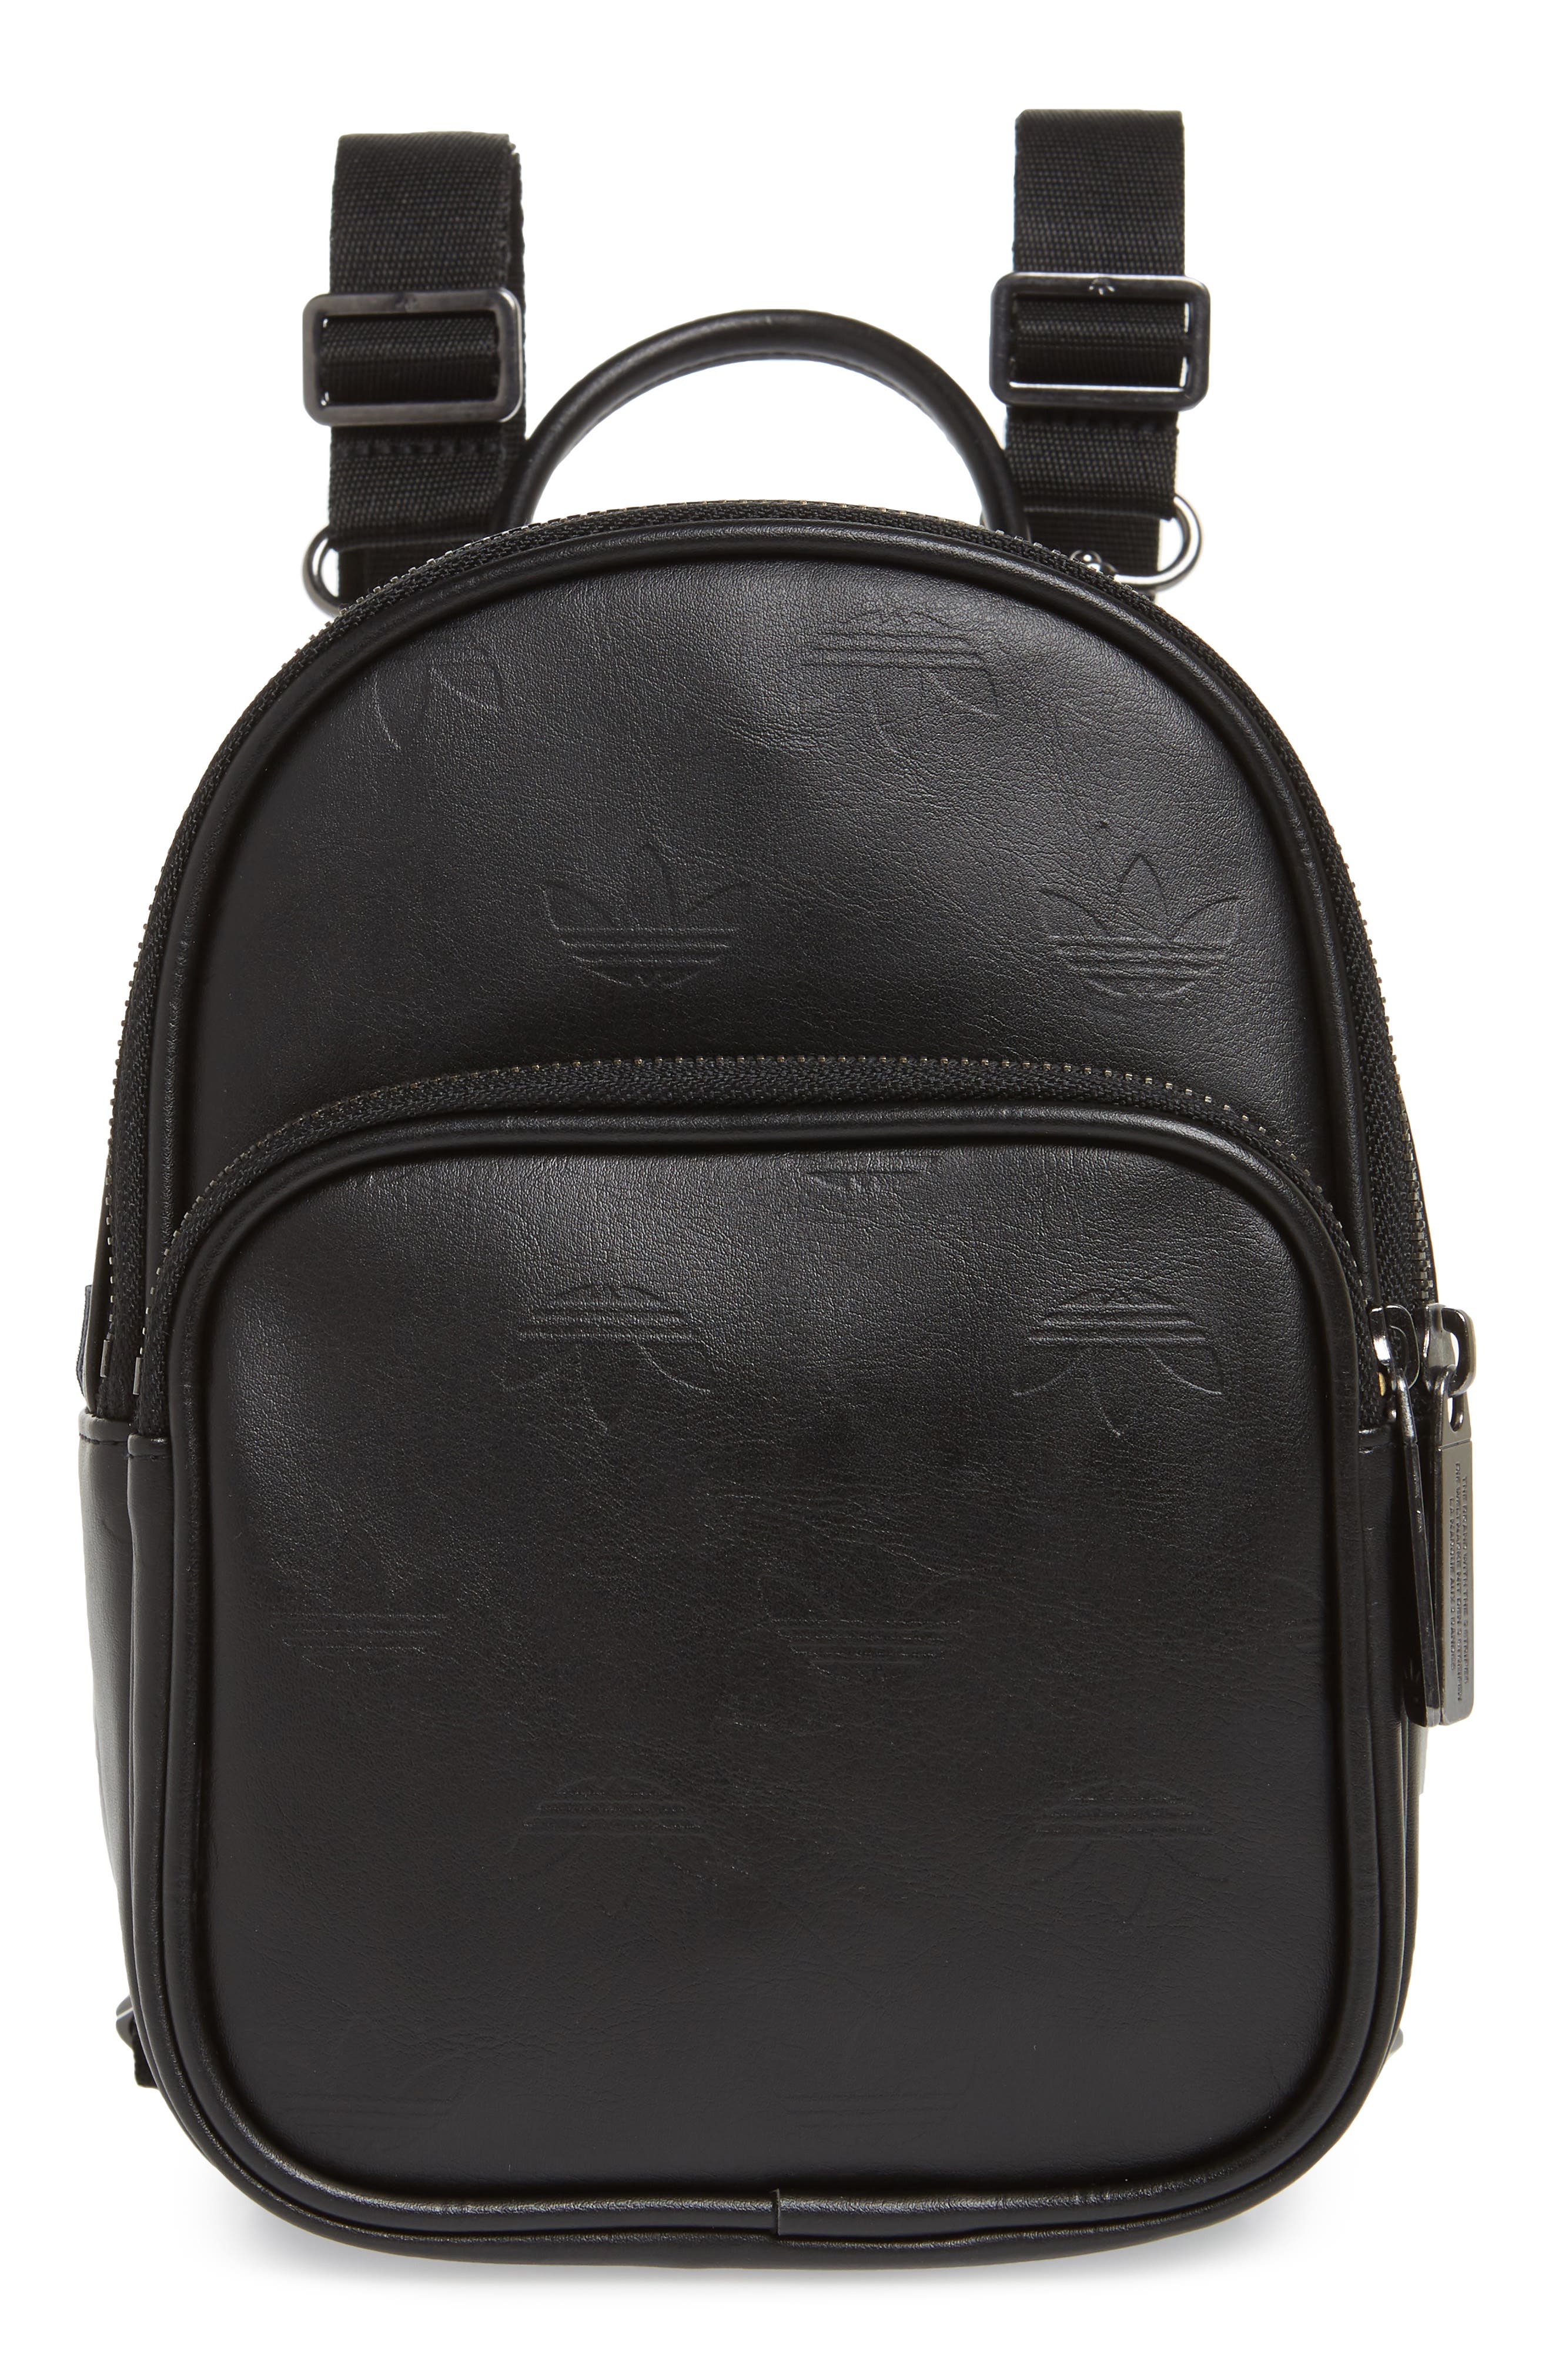 faux leather mini backpack adidas